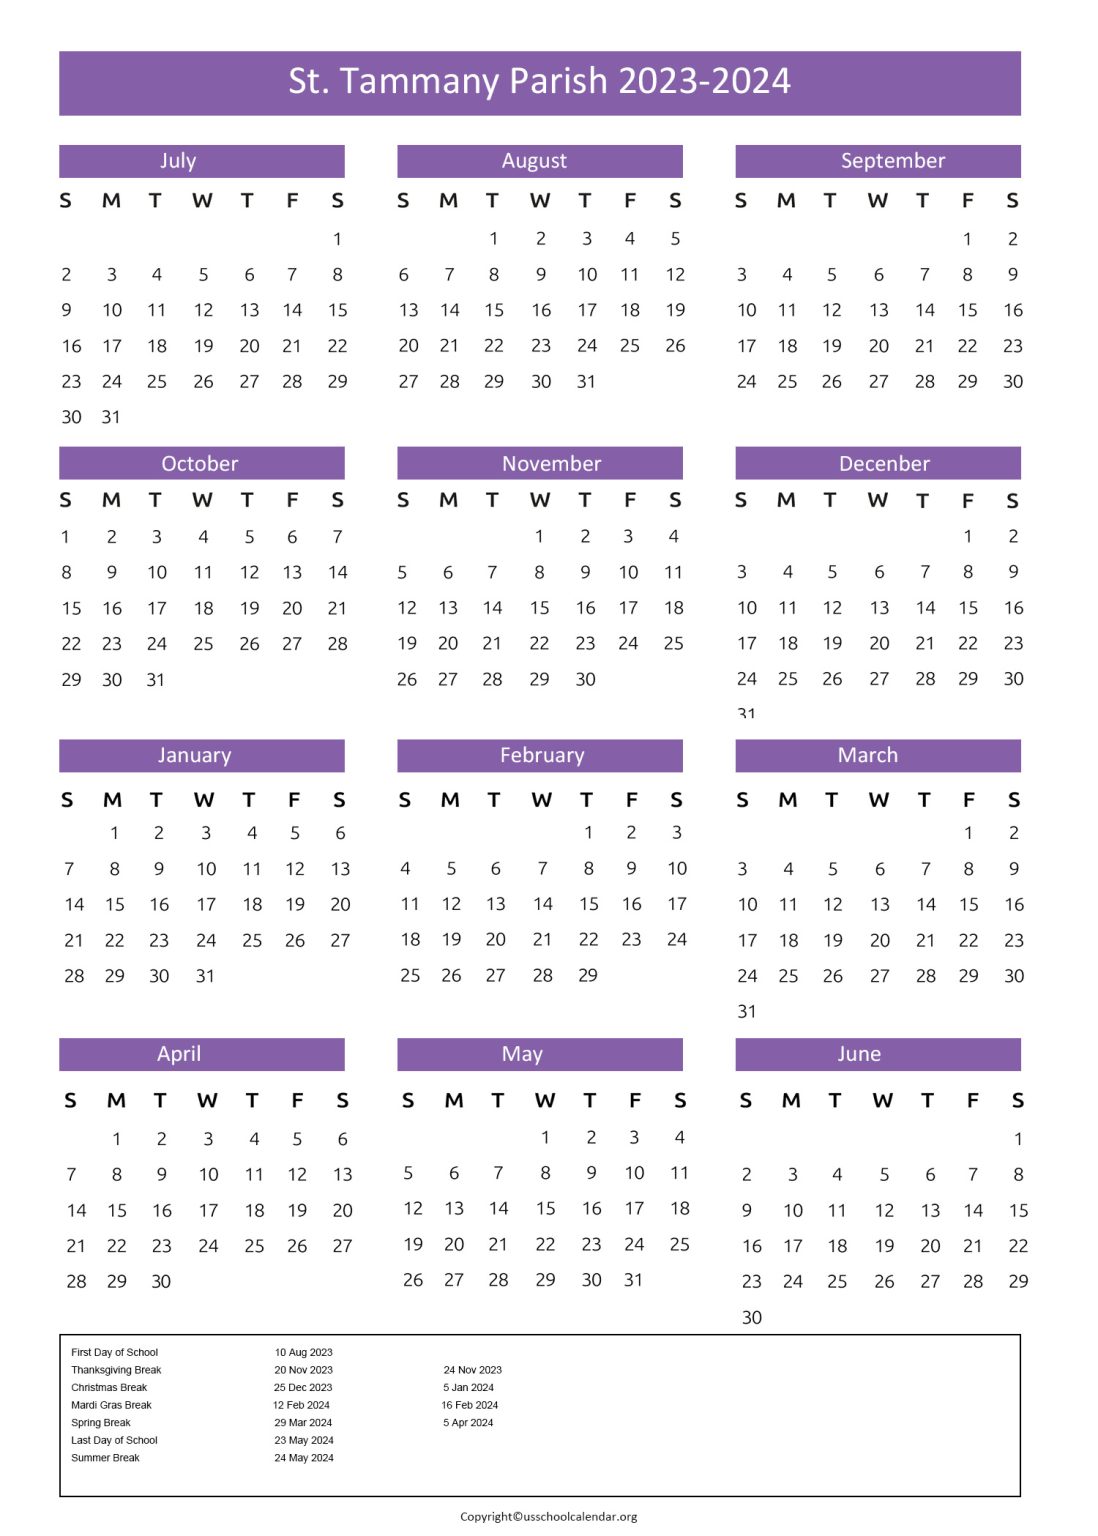 St Tammany Parish Schools Calendar with Holidays 2023 2024